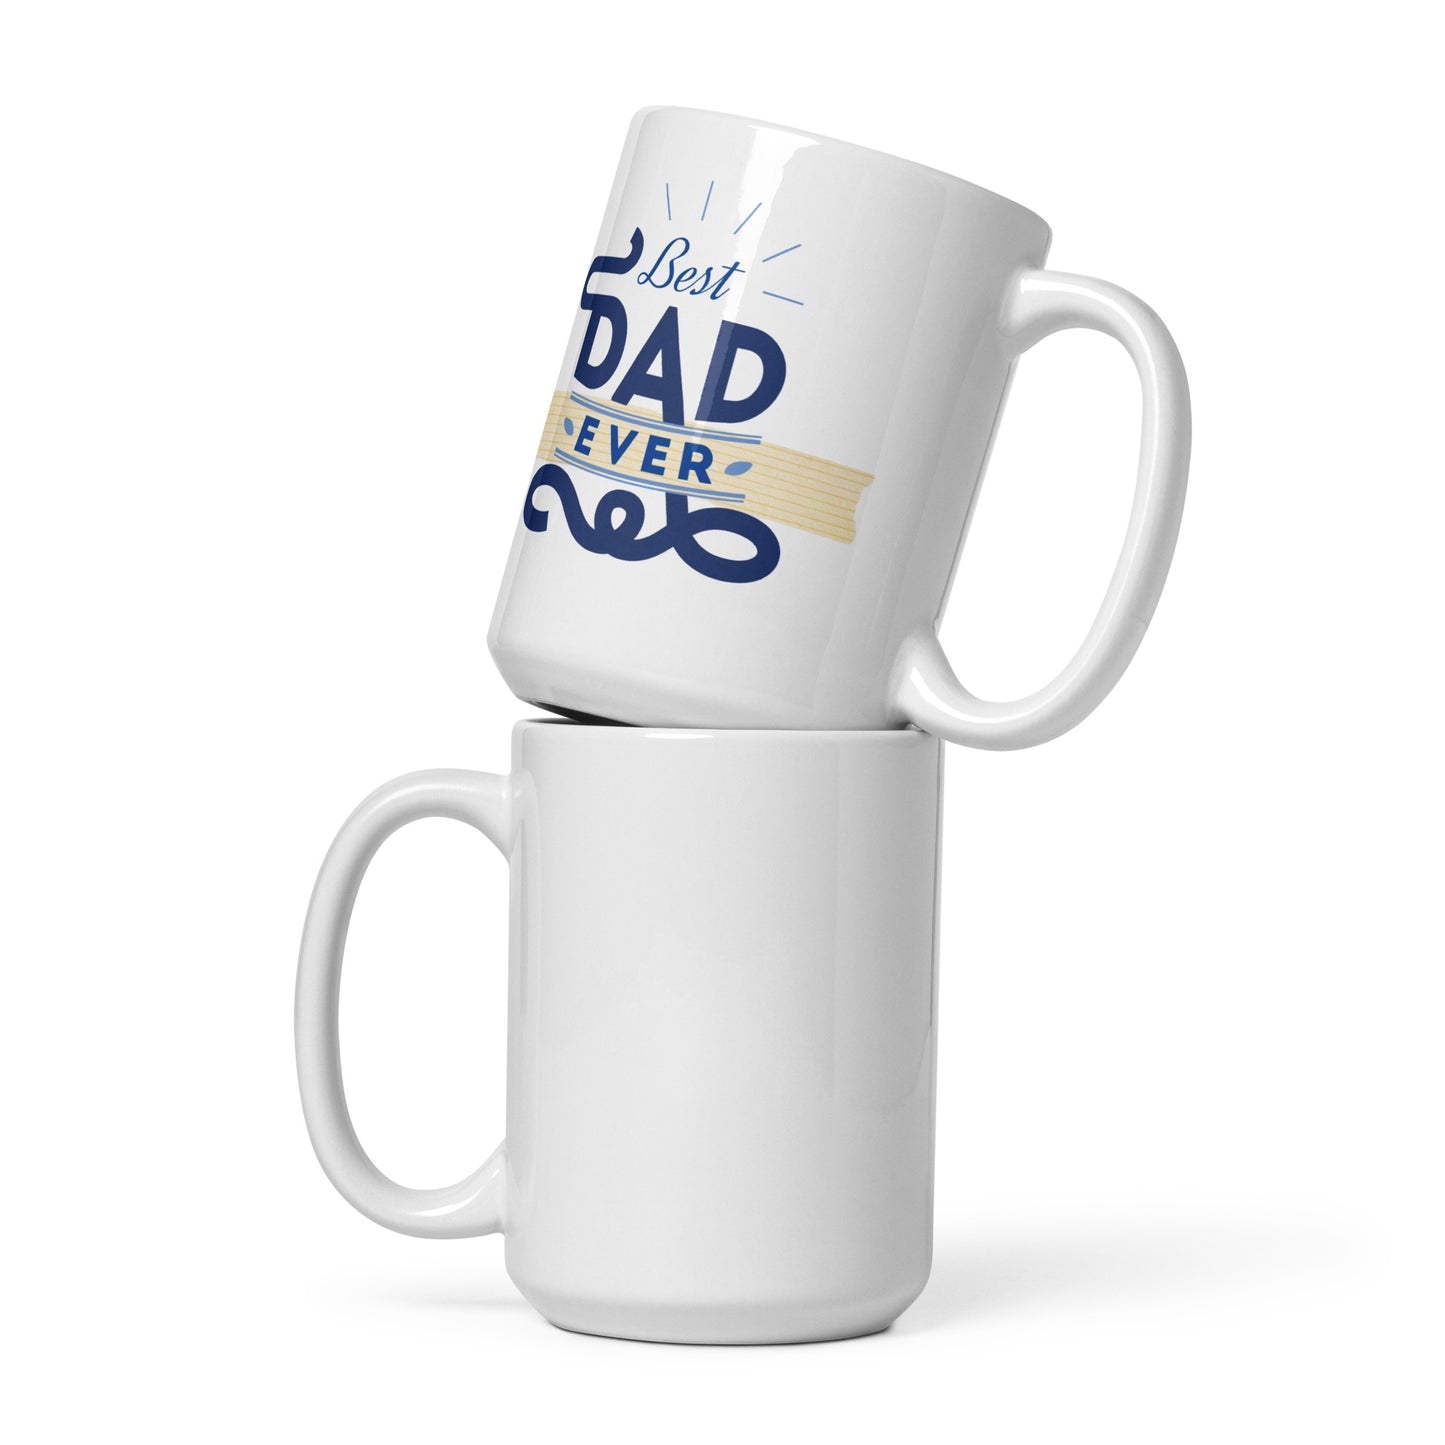 Best Dad Ever - White glossy mug